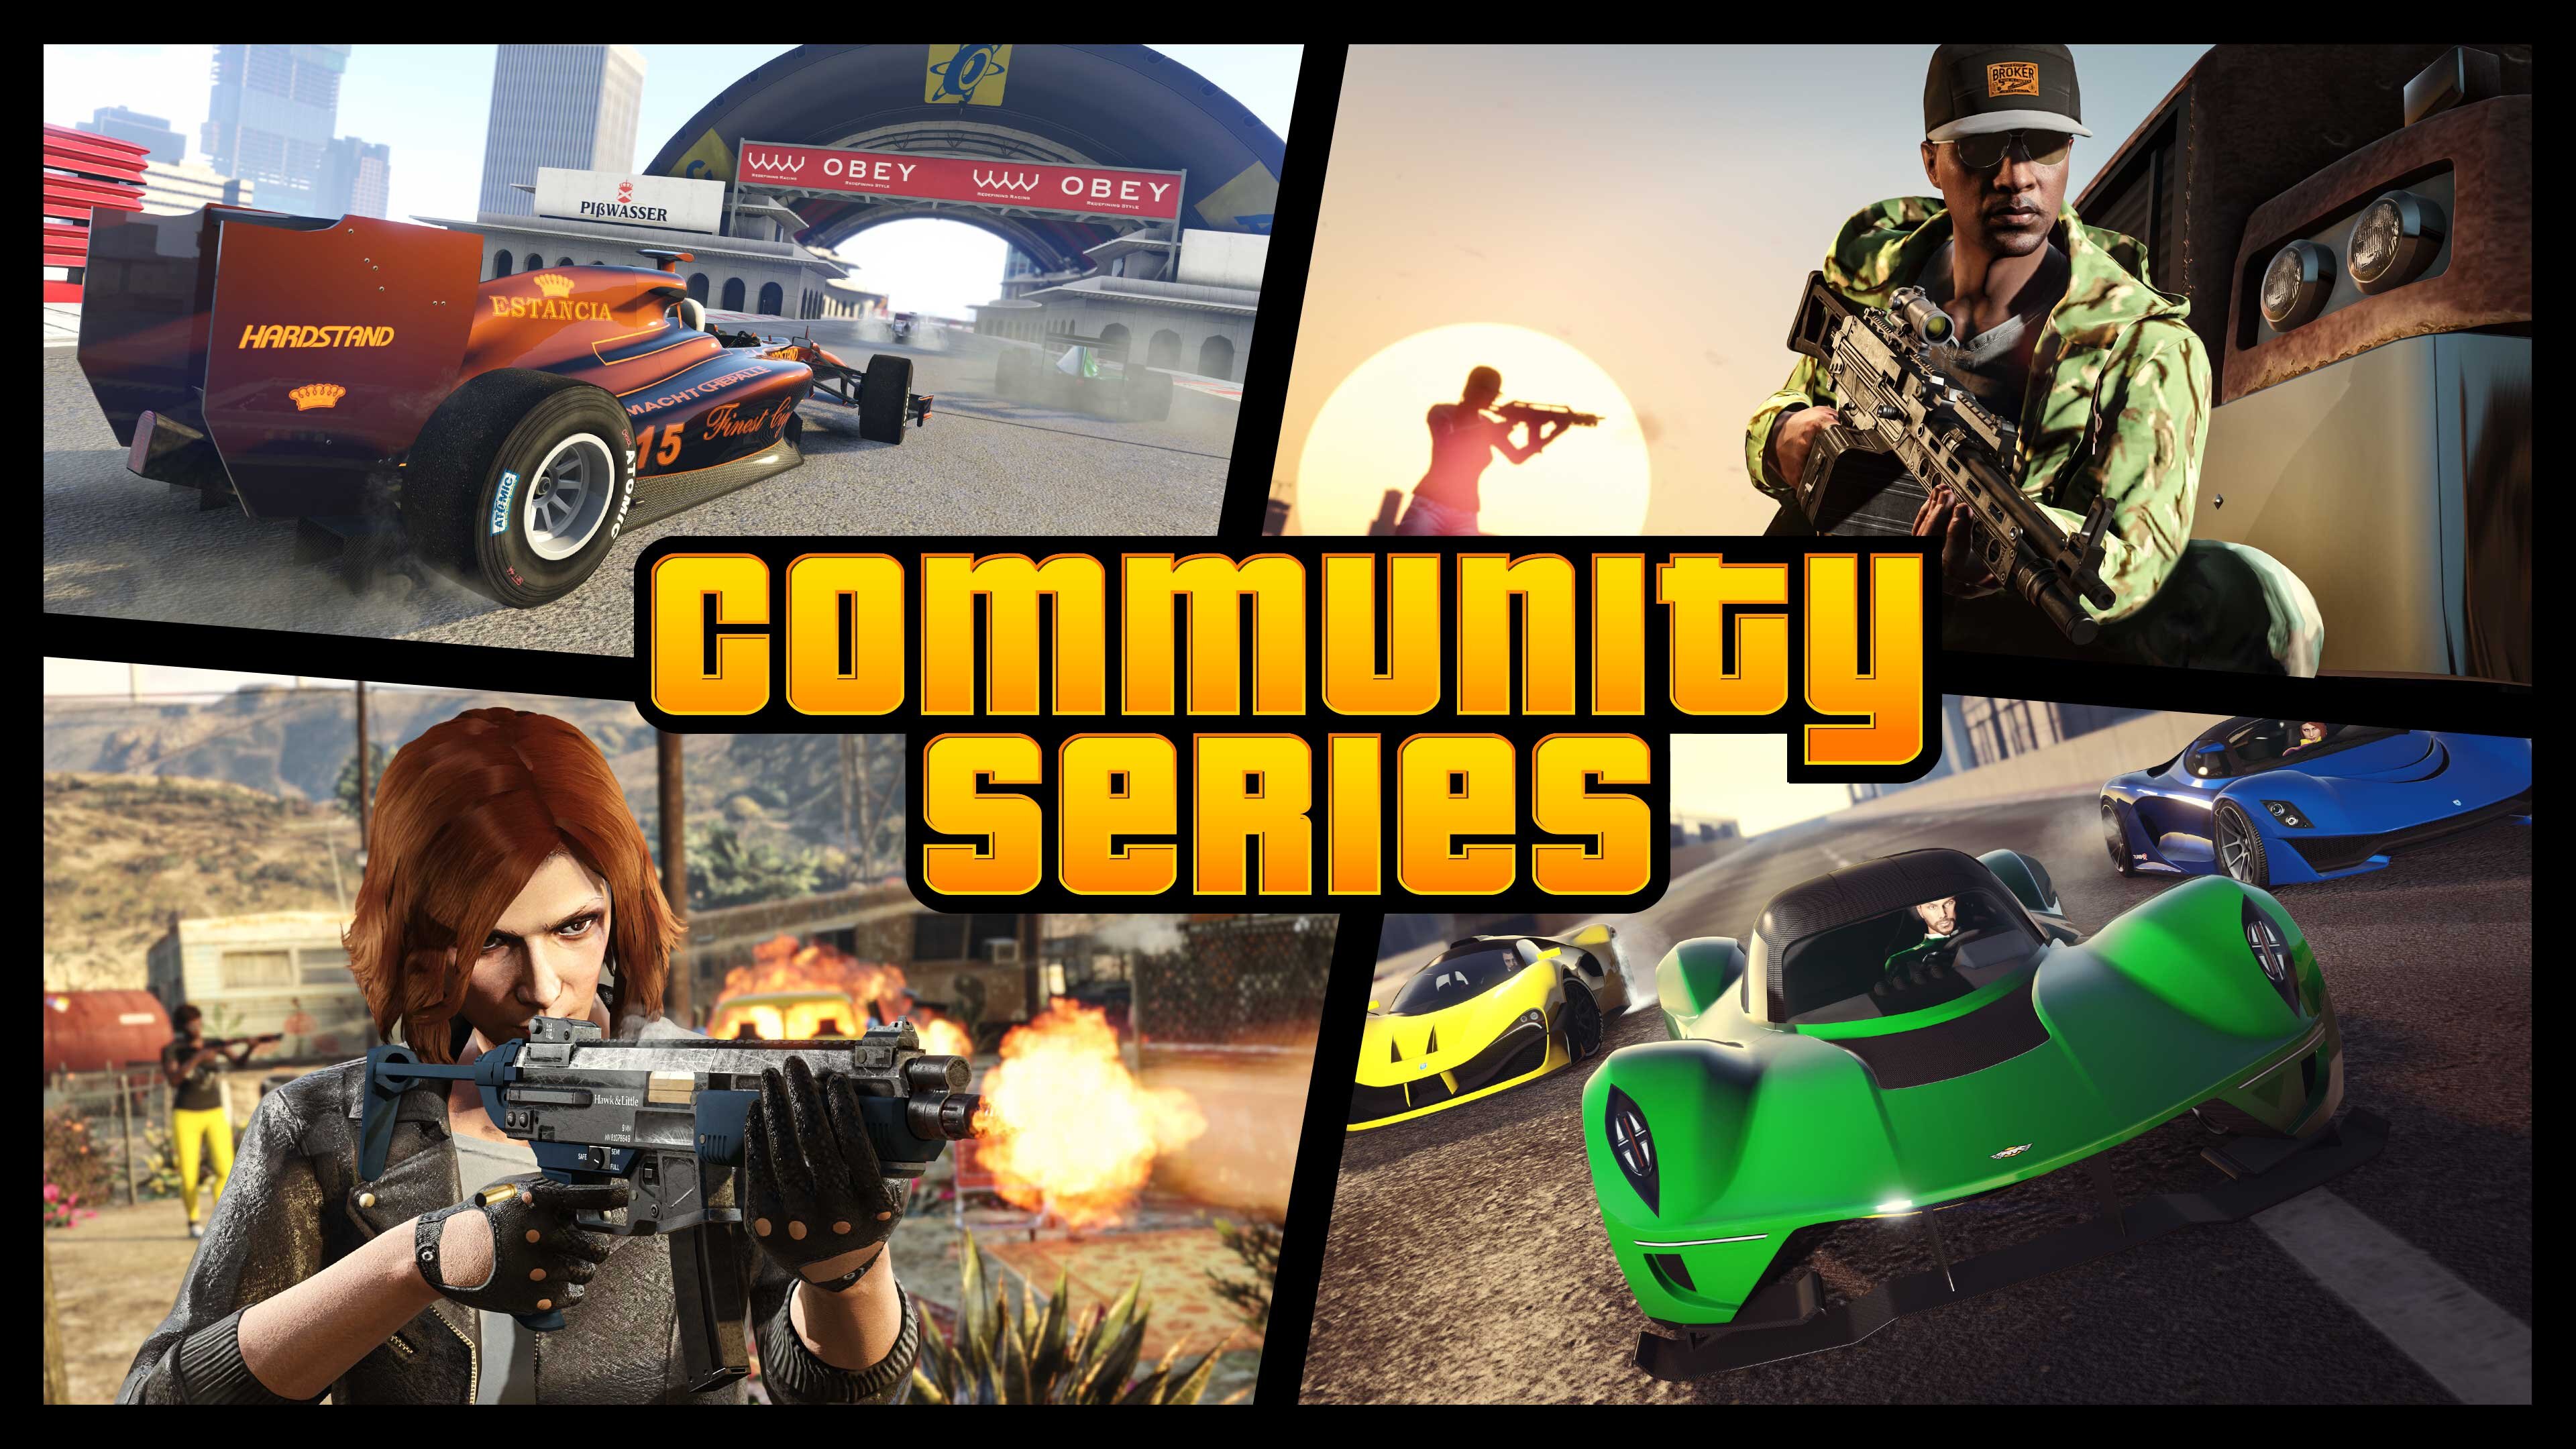 More information about "Nieuwe Community Series, Deathmatch Creator en meer voor GTA Online"